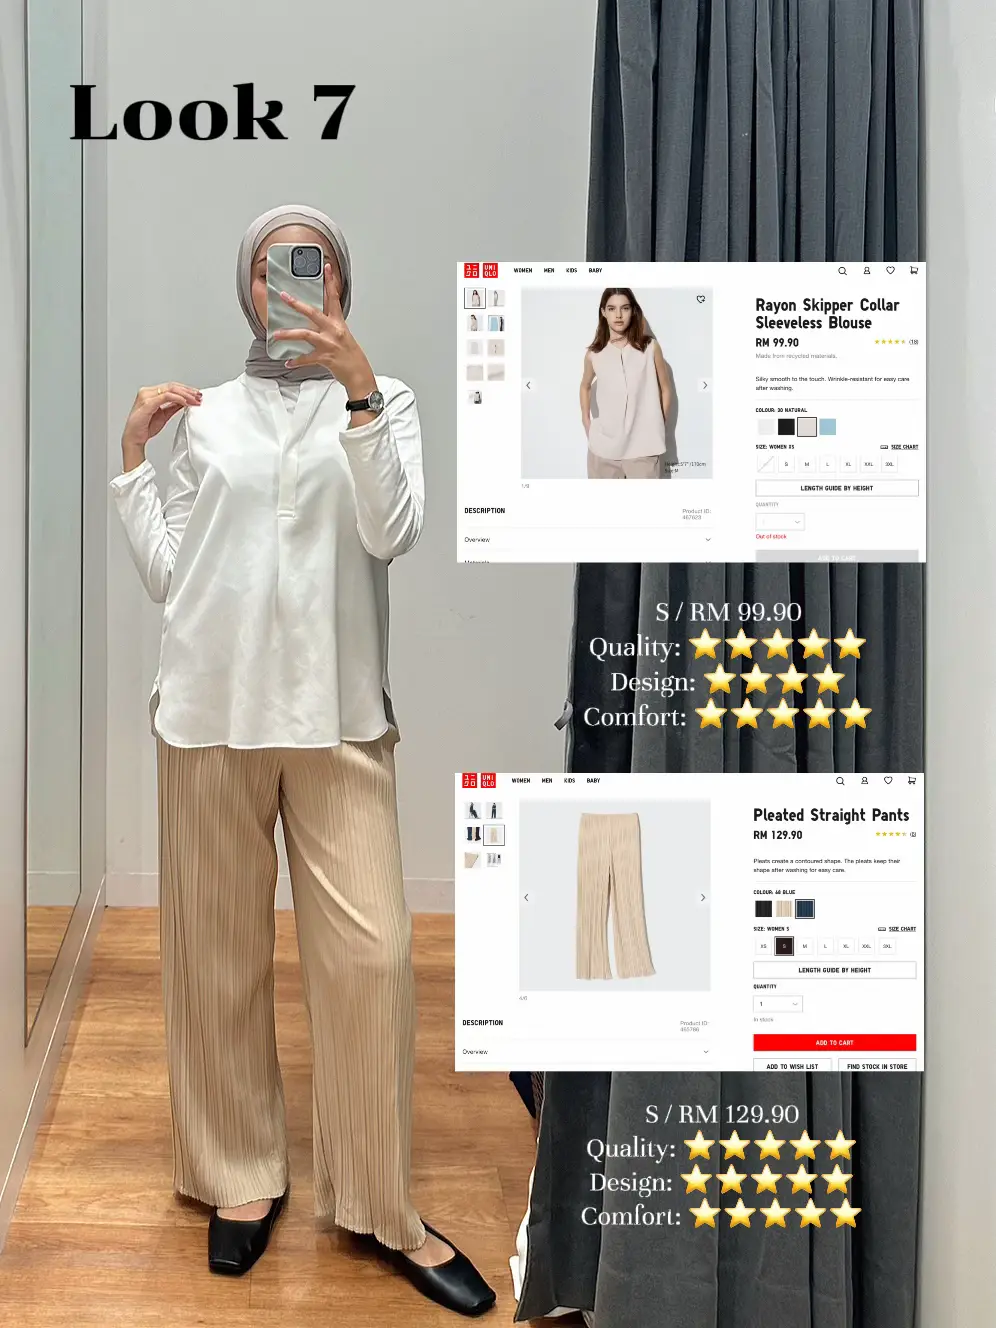 UNIQLO Malaysia - WOMEN Wireless Bra (Beauty Light) RM 79.90 Get it at:   WOMEN Ultra Seamless Shorts (Hiphugger) RM  24.90 Get it at:  WOMEN Extra Fine Cotton  Oversized Long Sleeve